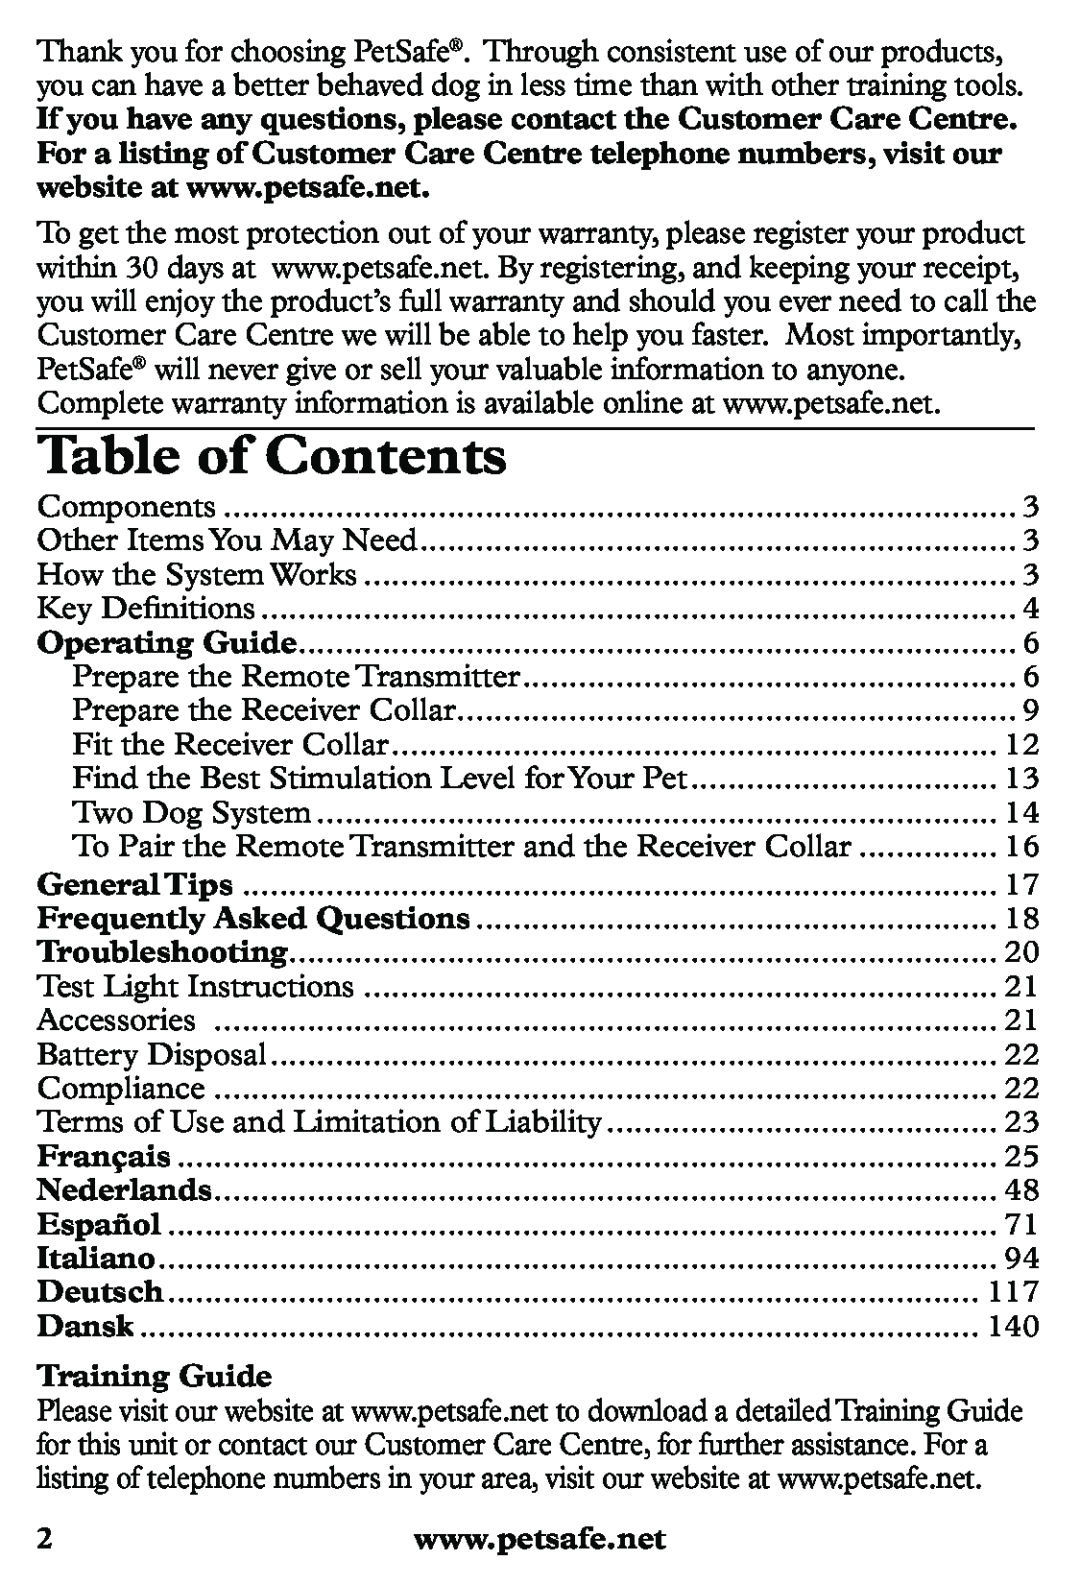 Petsafe PDT20-11939 manuel dutilisation Table of Contents, Training Guide 